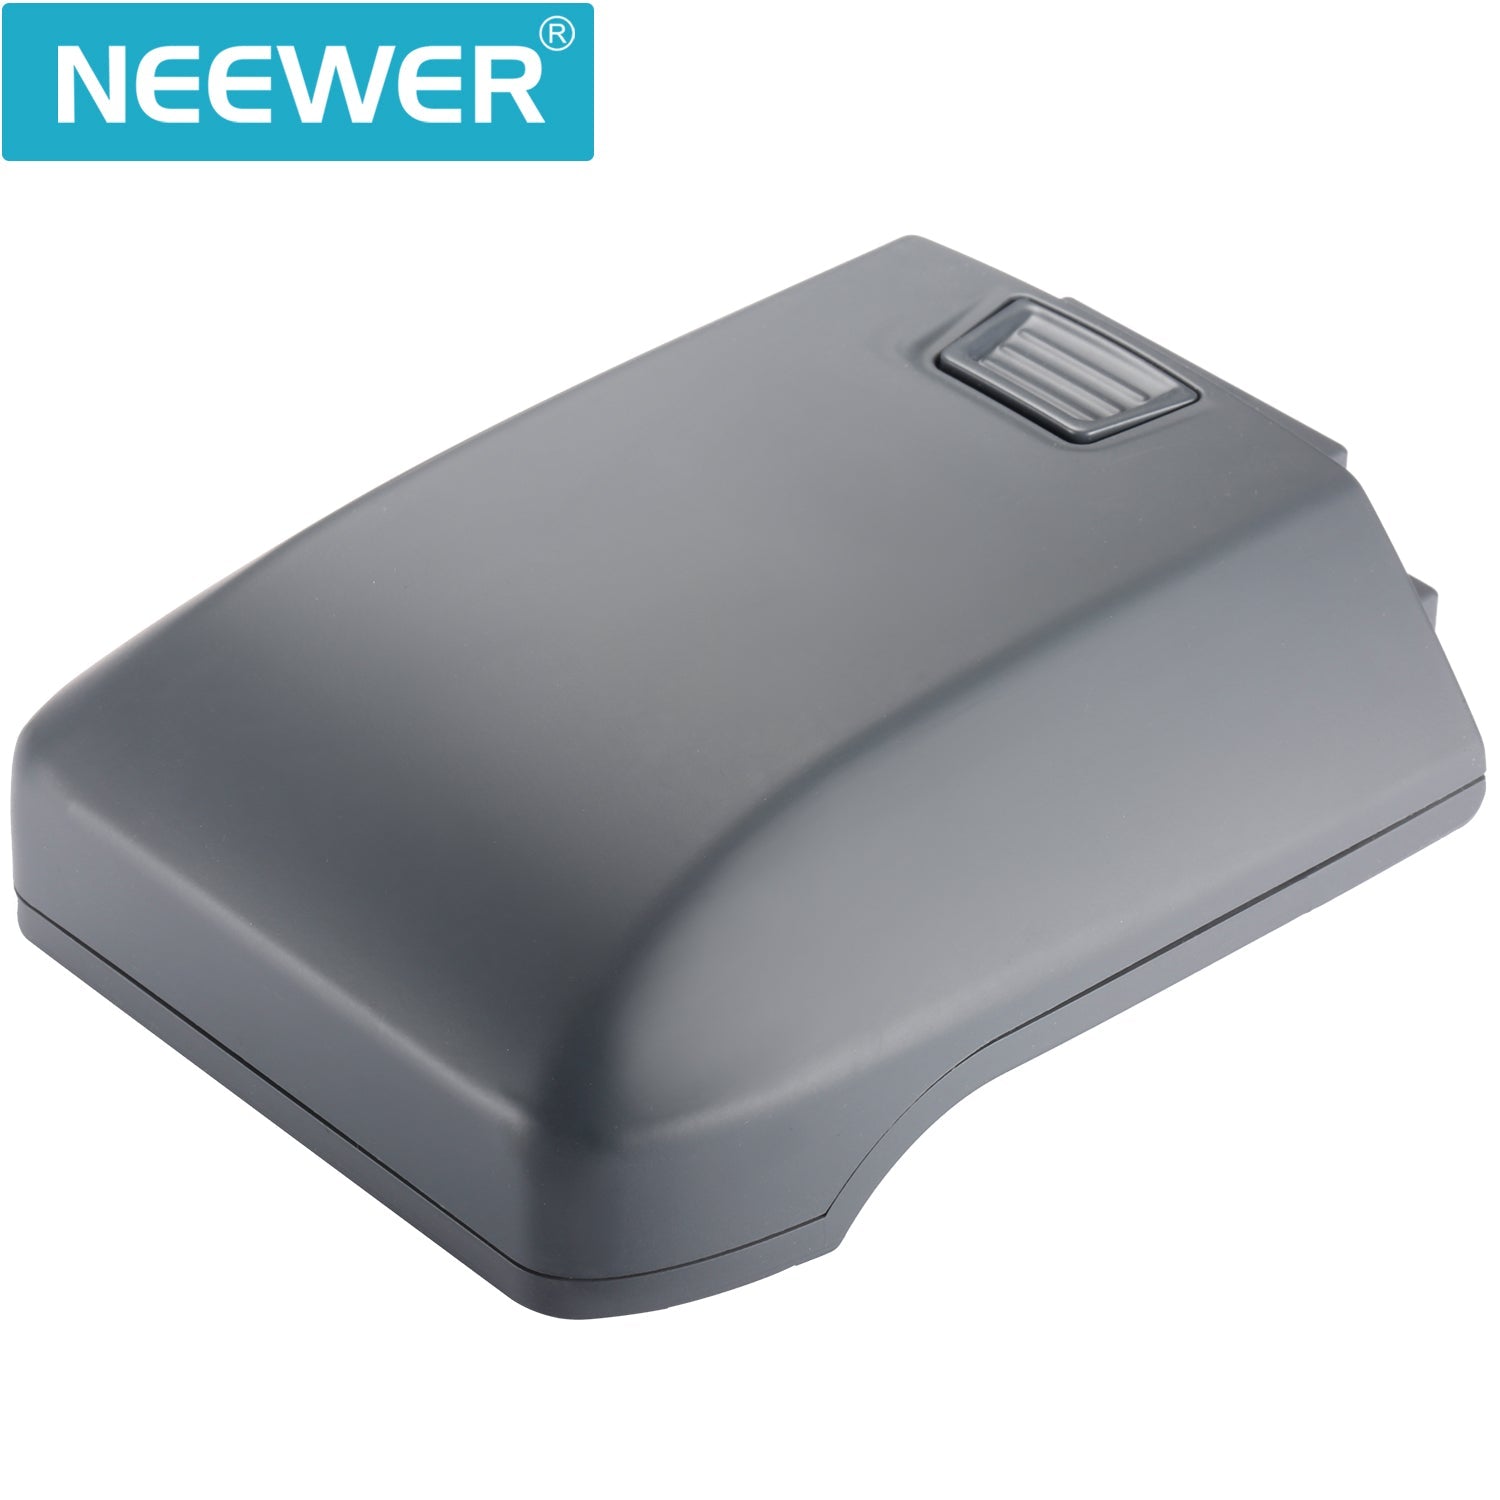 Neewer 11.1V 6000mAh High Capacity Rechargeable Flash Spare Li-ion Battery